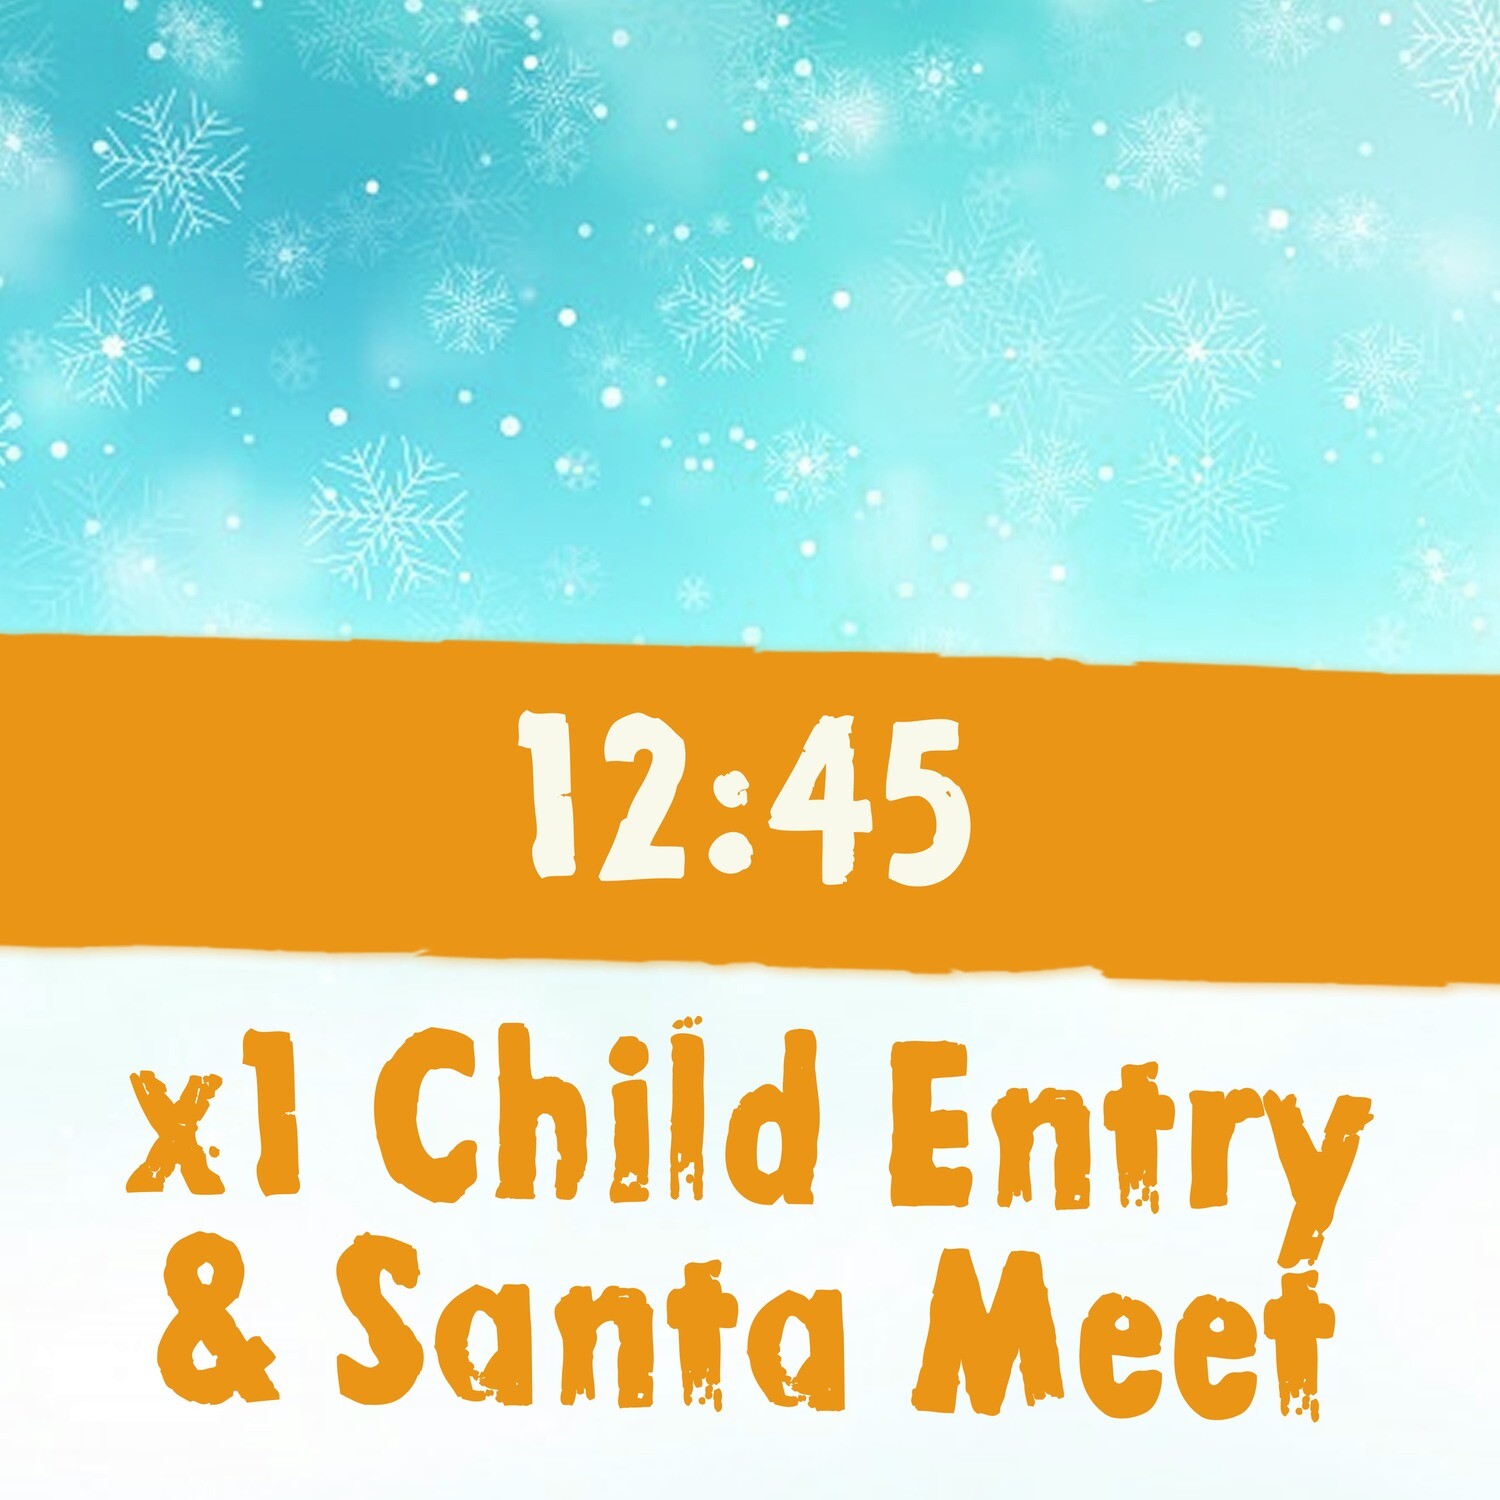 x1 Child Admission + Santa Meet 3rd Dec / 12:45